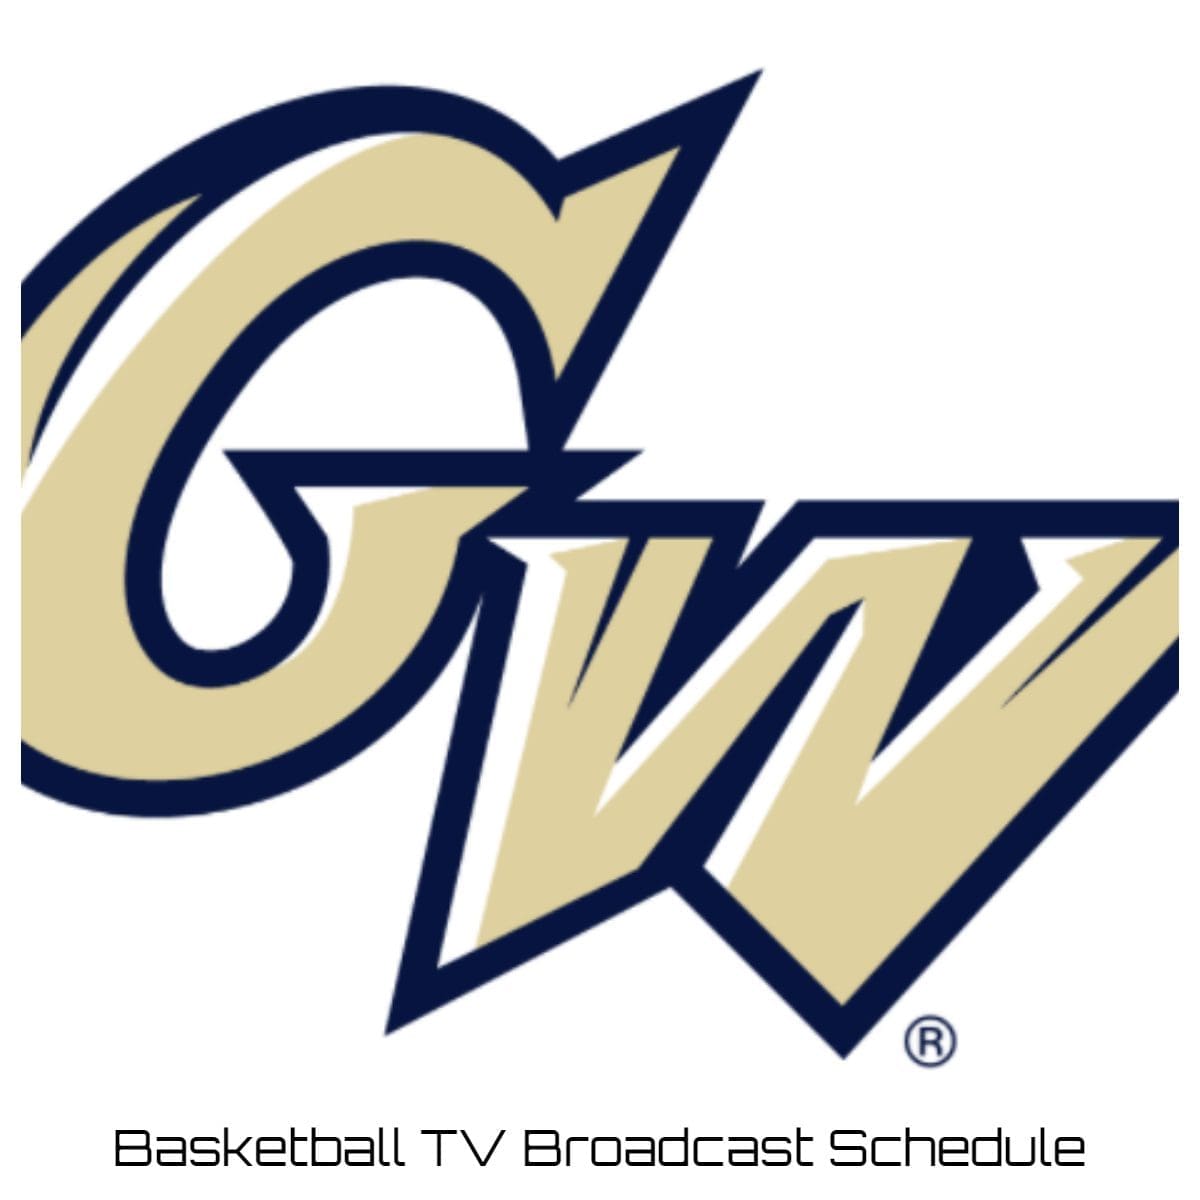 George Washington Colonials Basketball TV Broadcast Schedule